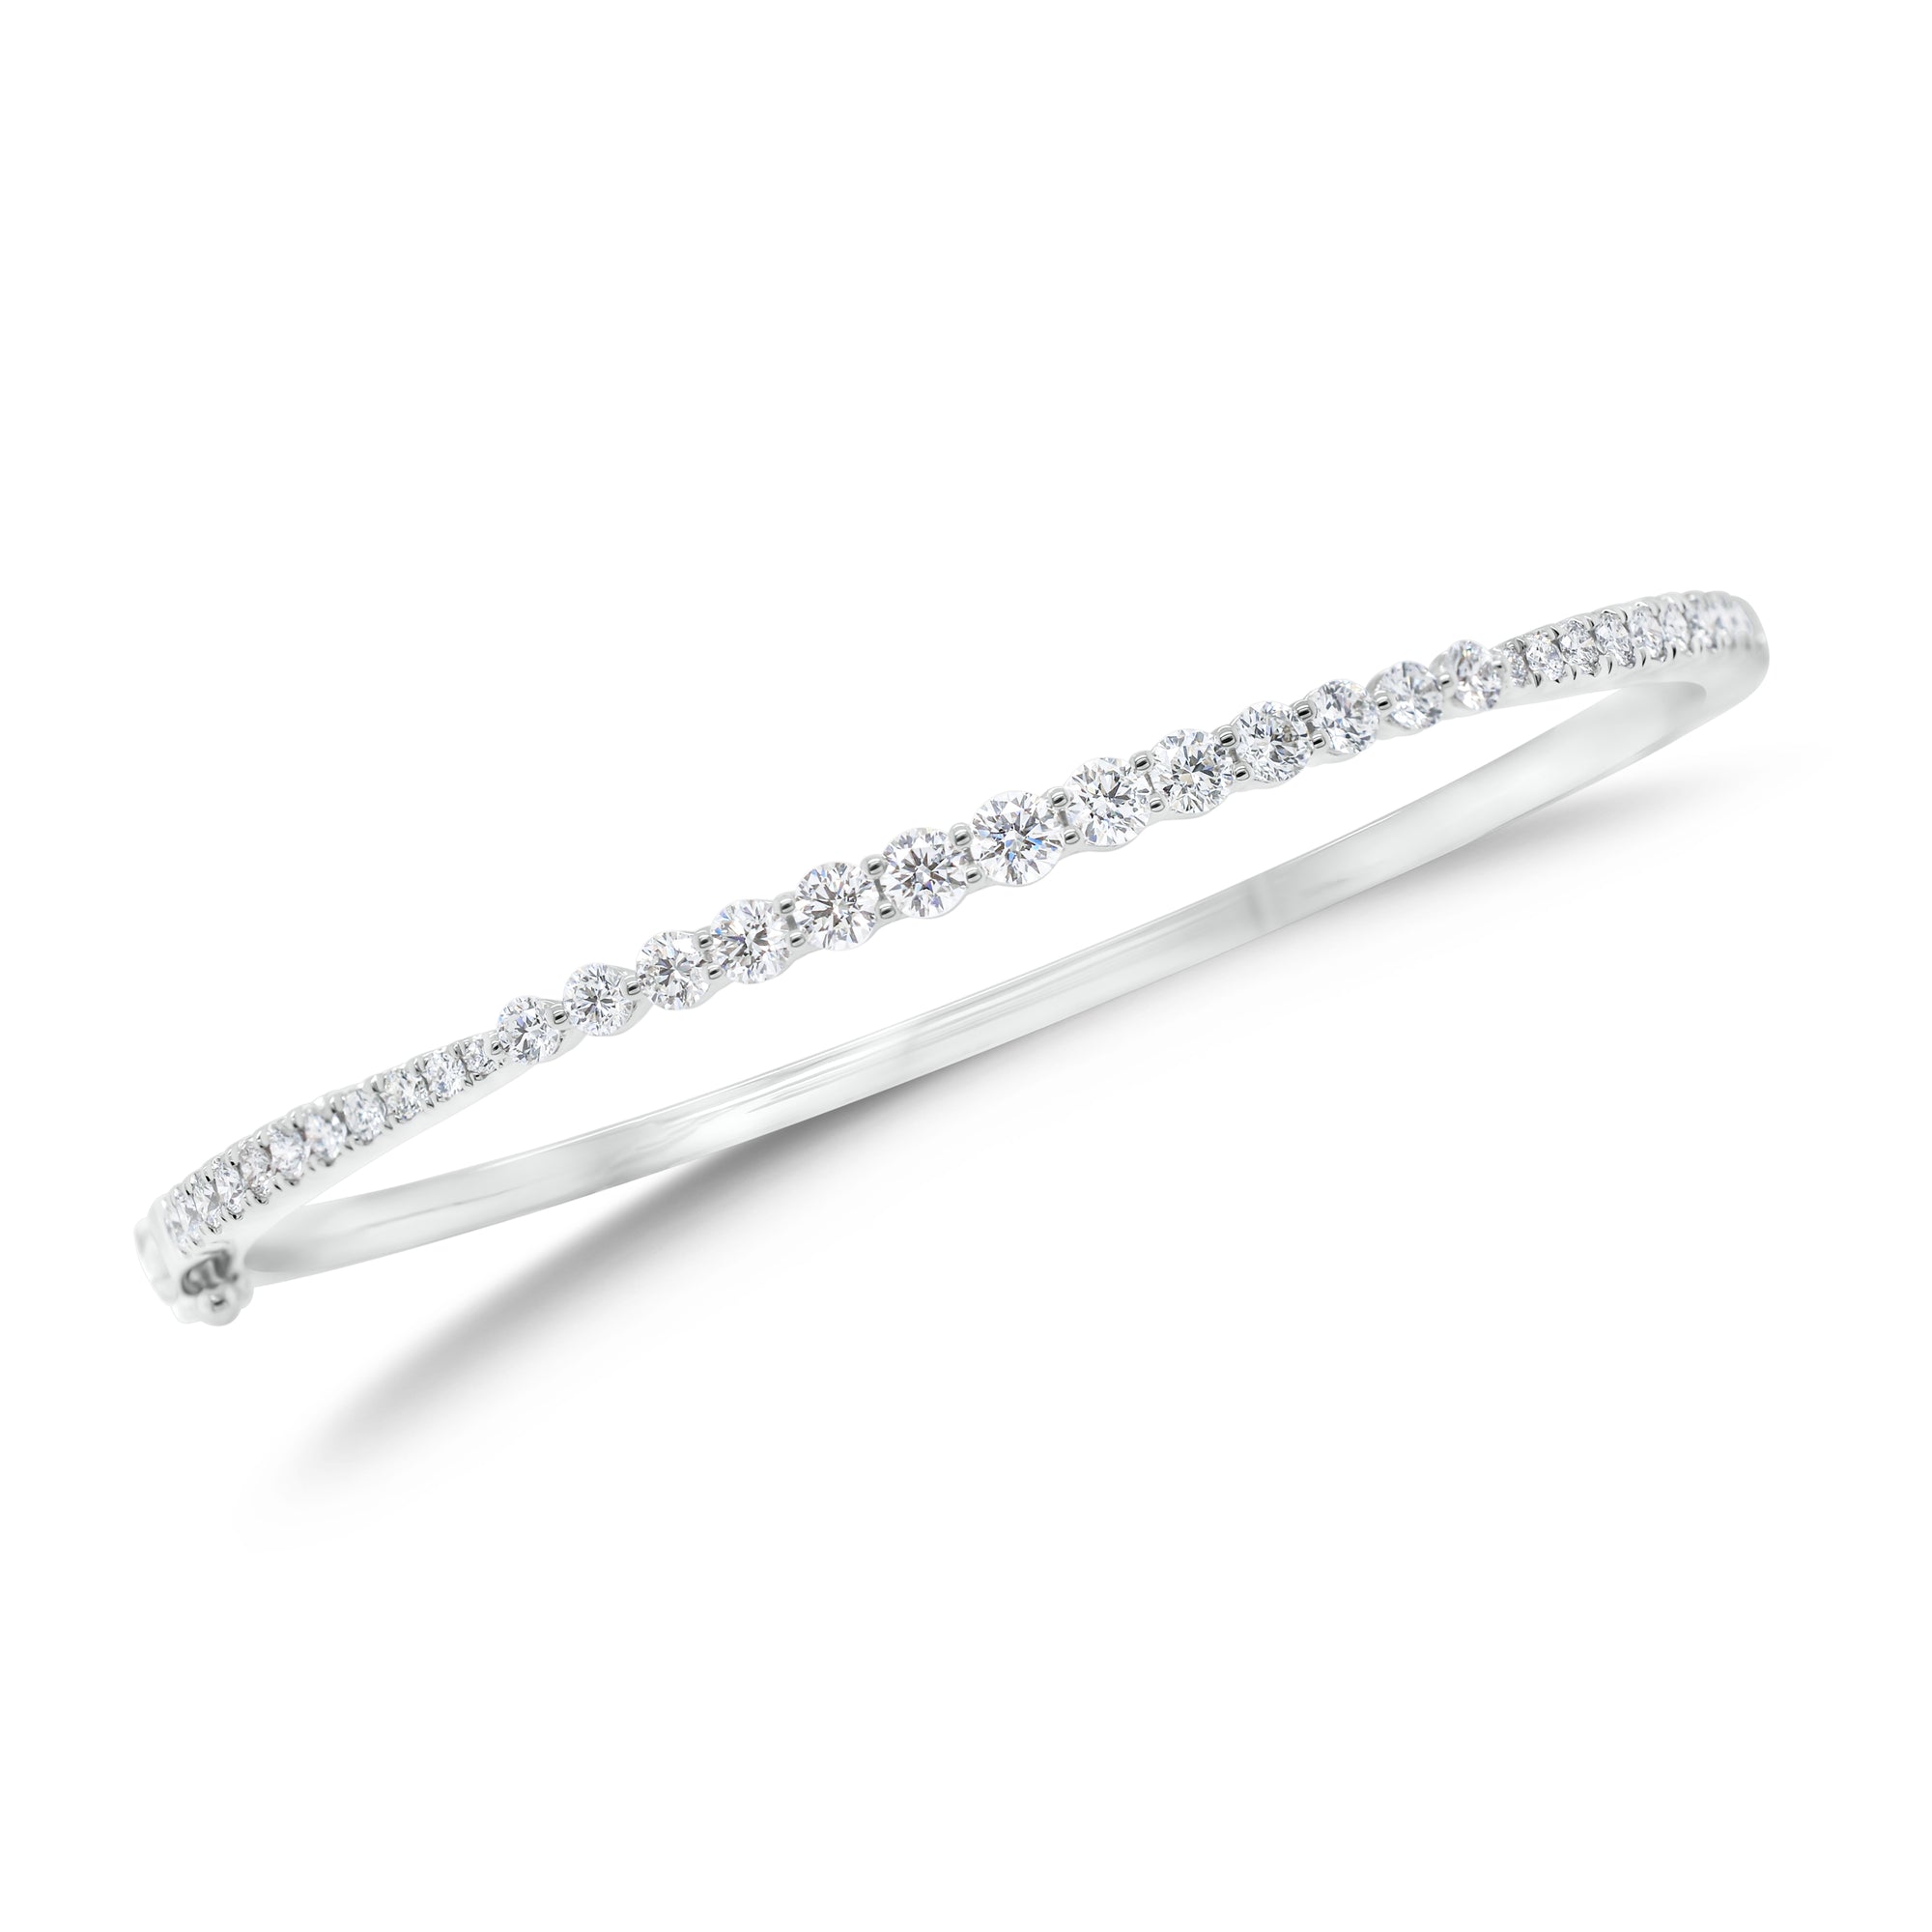 Graduated Diamond Bangle Bracelet - 18K white gold weighing 10.79 grams - 22 round diamonds totaling 0.39 carats - 13 round diamonds totaling 0.91 carats